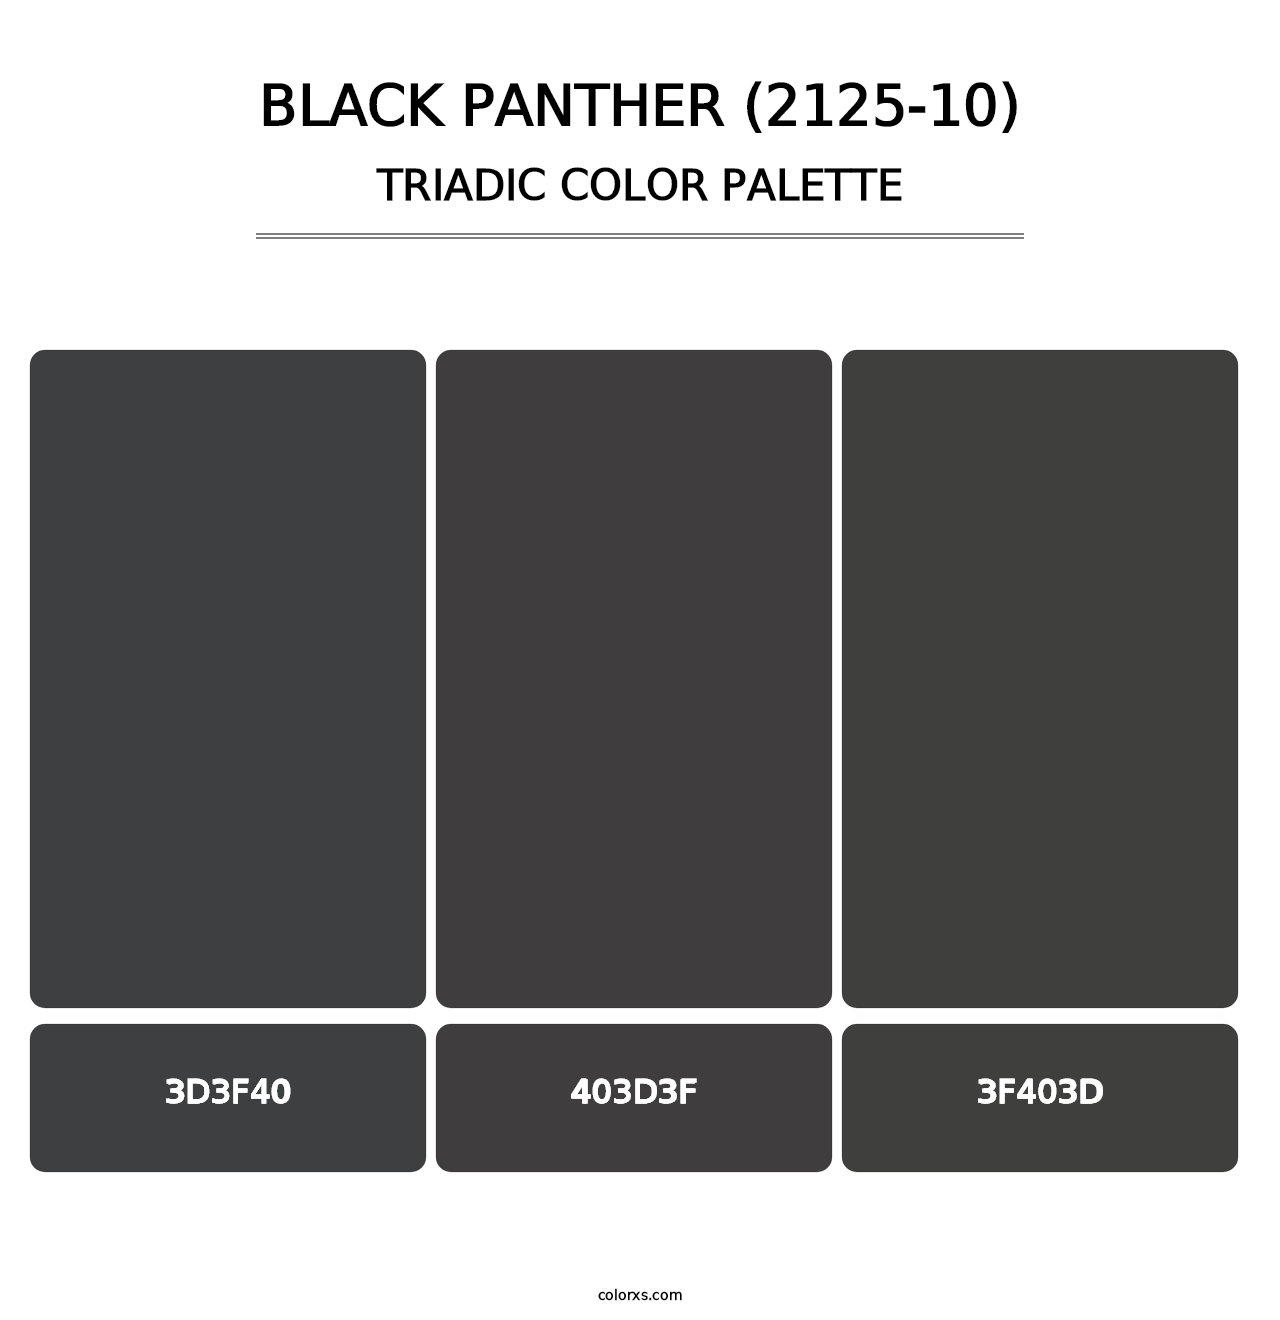 Black Panther (2125-10) - Triadic Color Palette